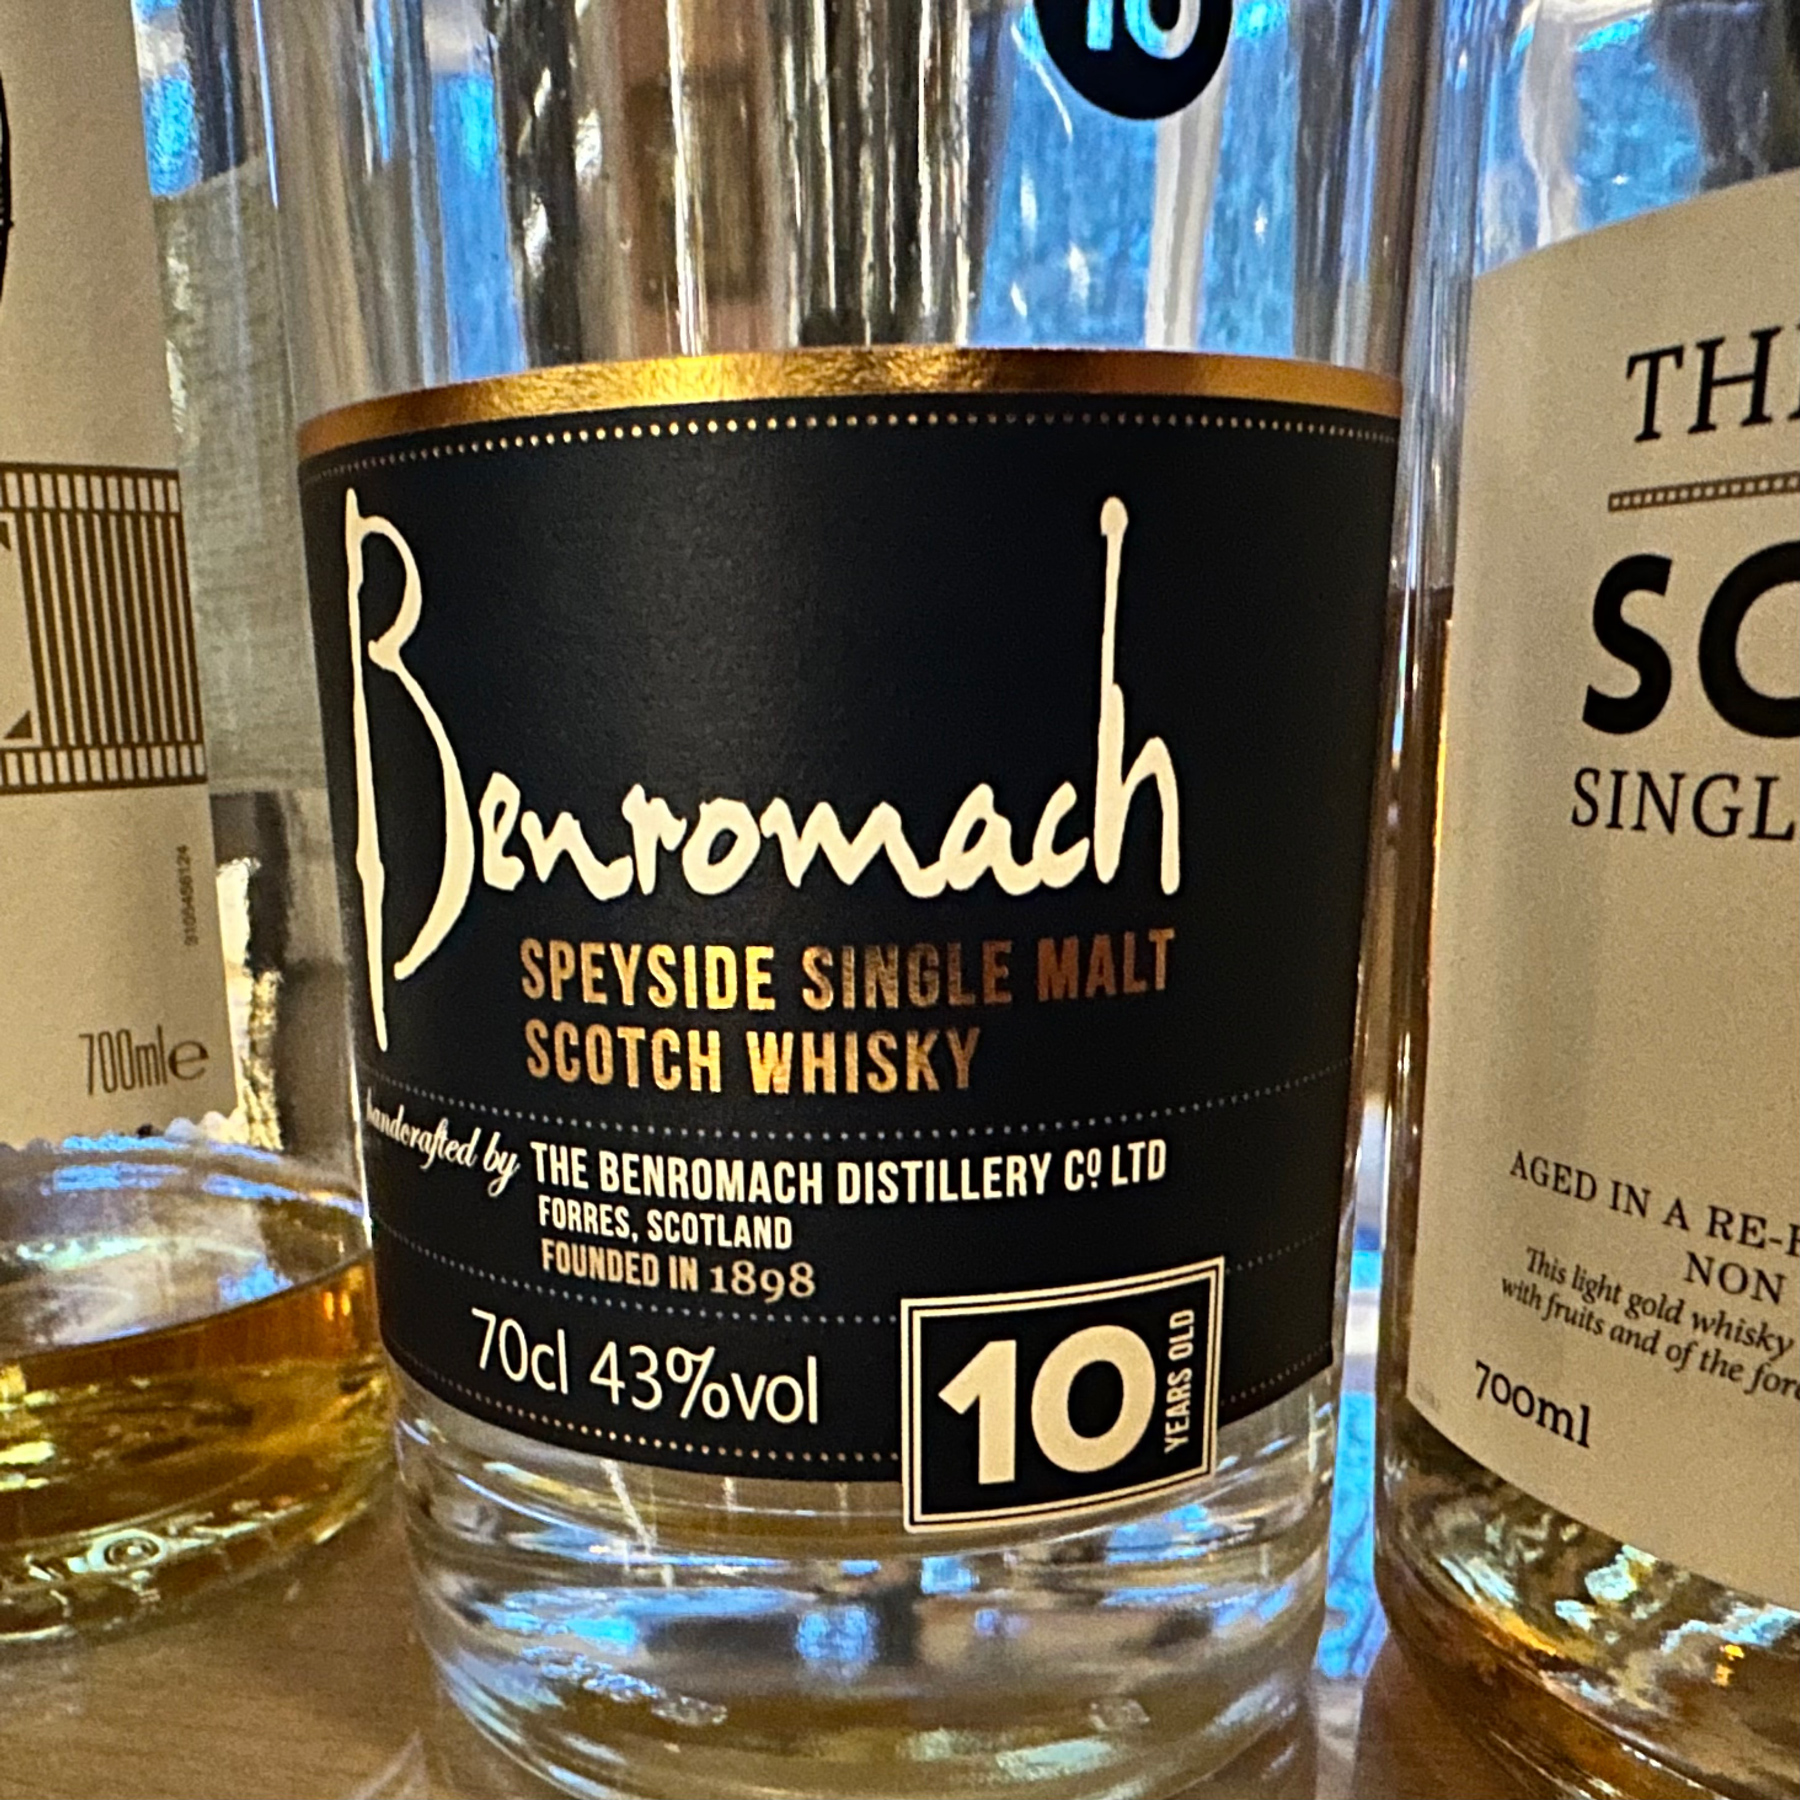 The Benromach 10 whisky bottle